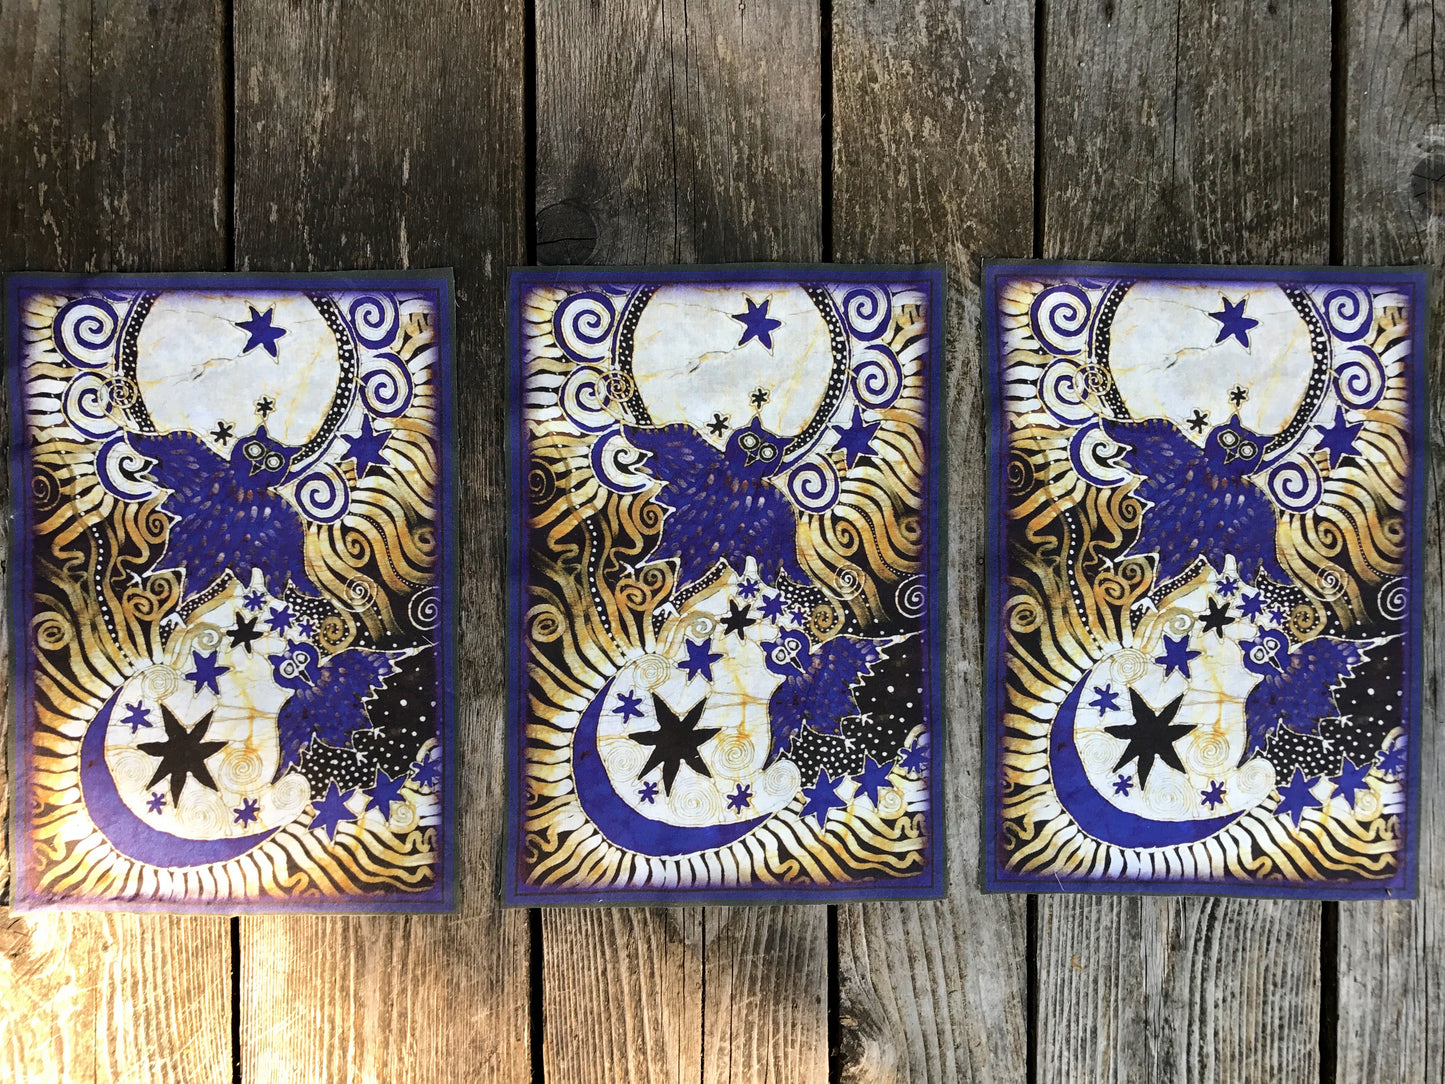 Owl Sun Moon Batik Fabric Print Patch